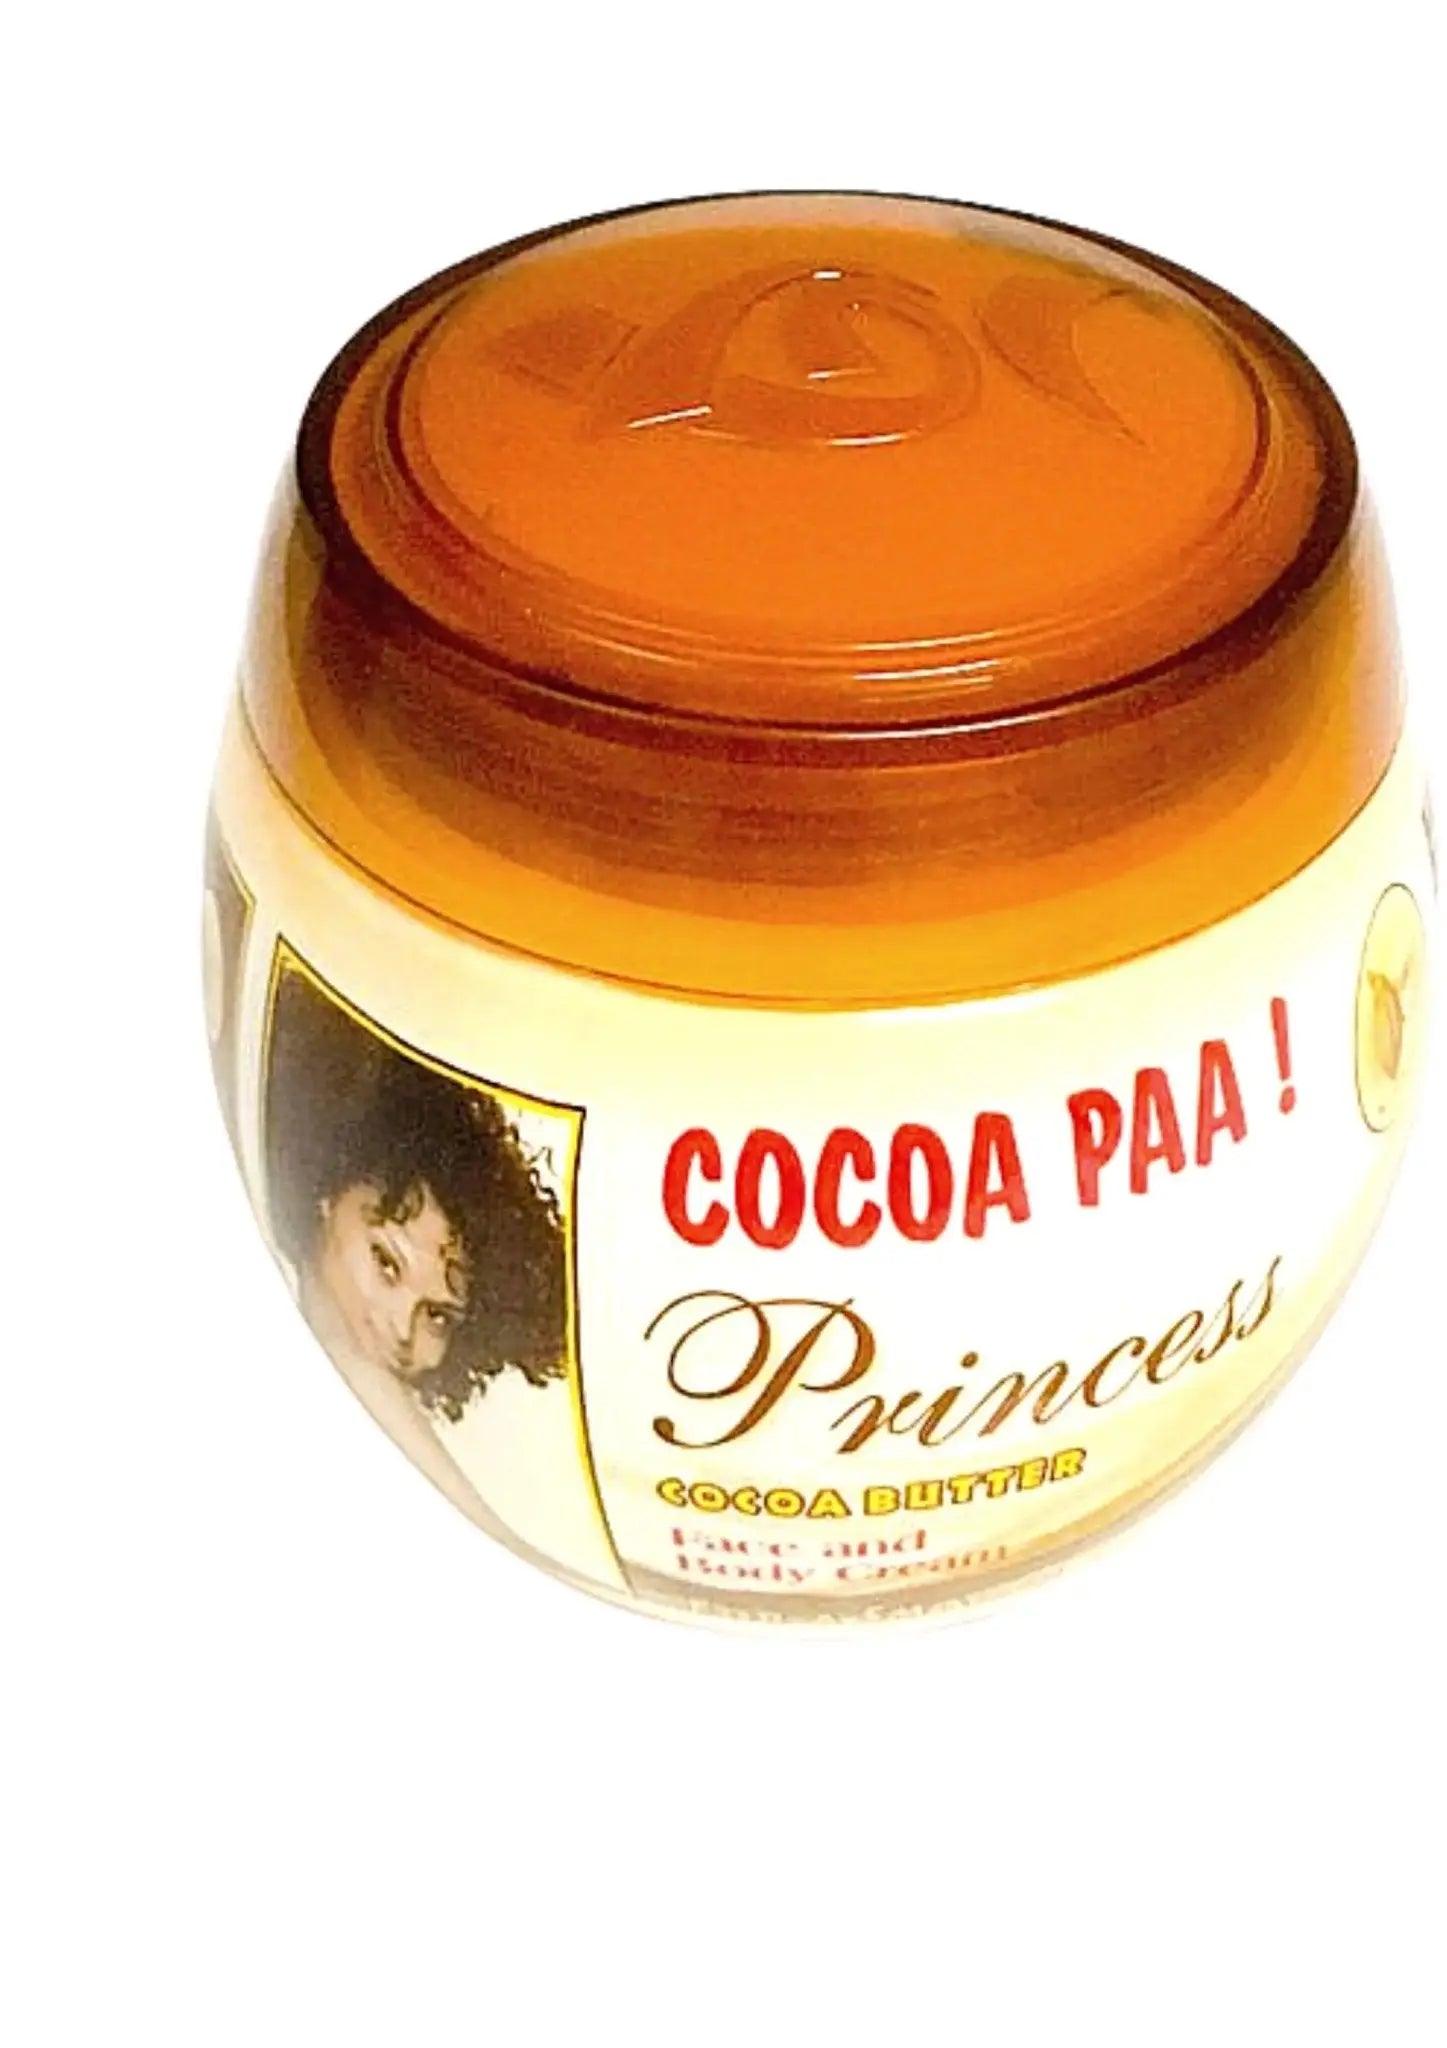 Princess Cocoa Paa Cocoa butter Hand and Body Cream 460ml by Princess Cocoa Paa - Honesty Sales U.K